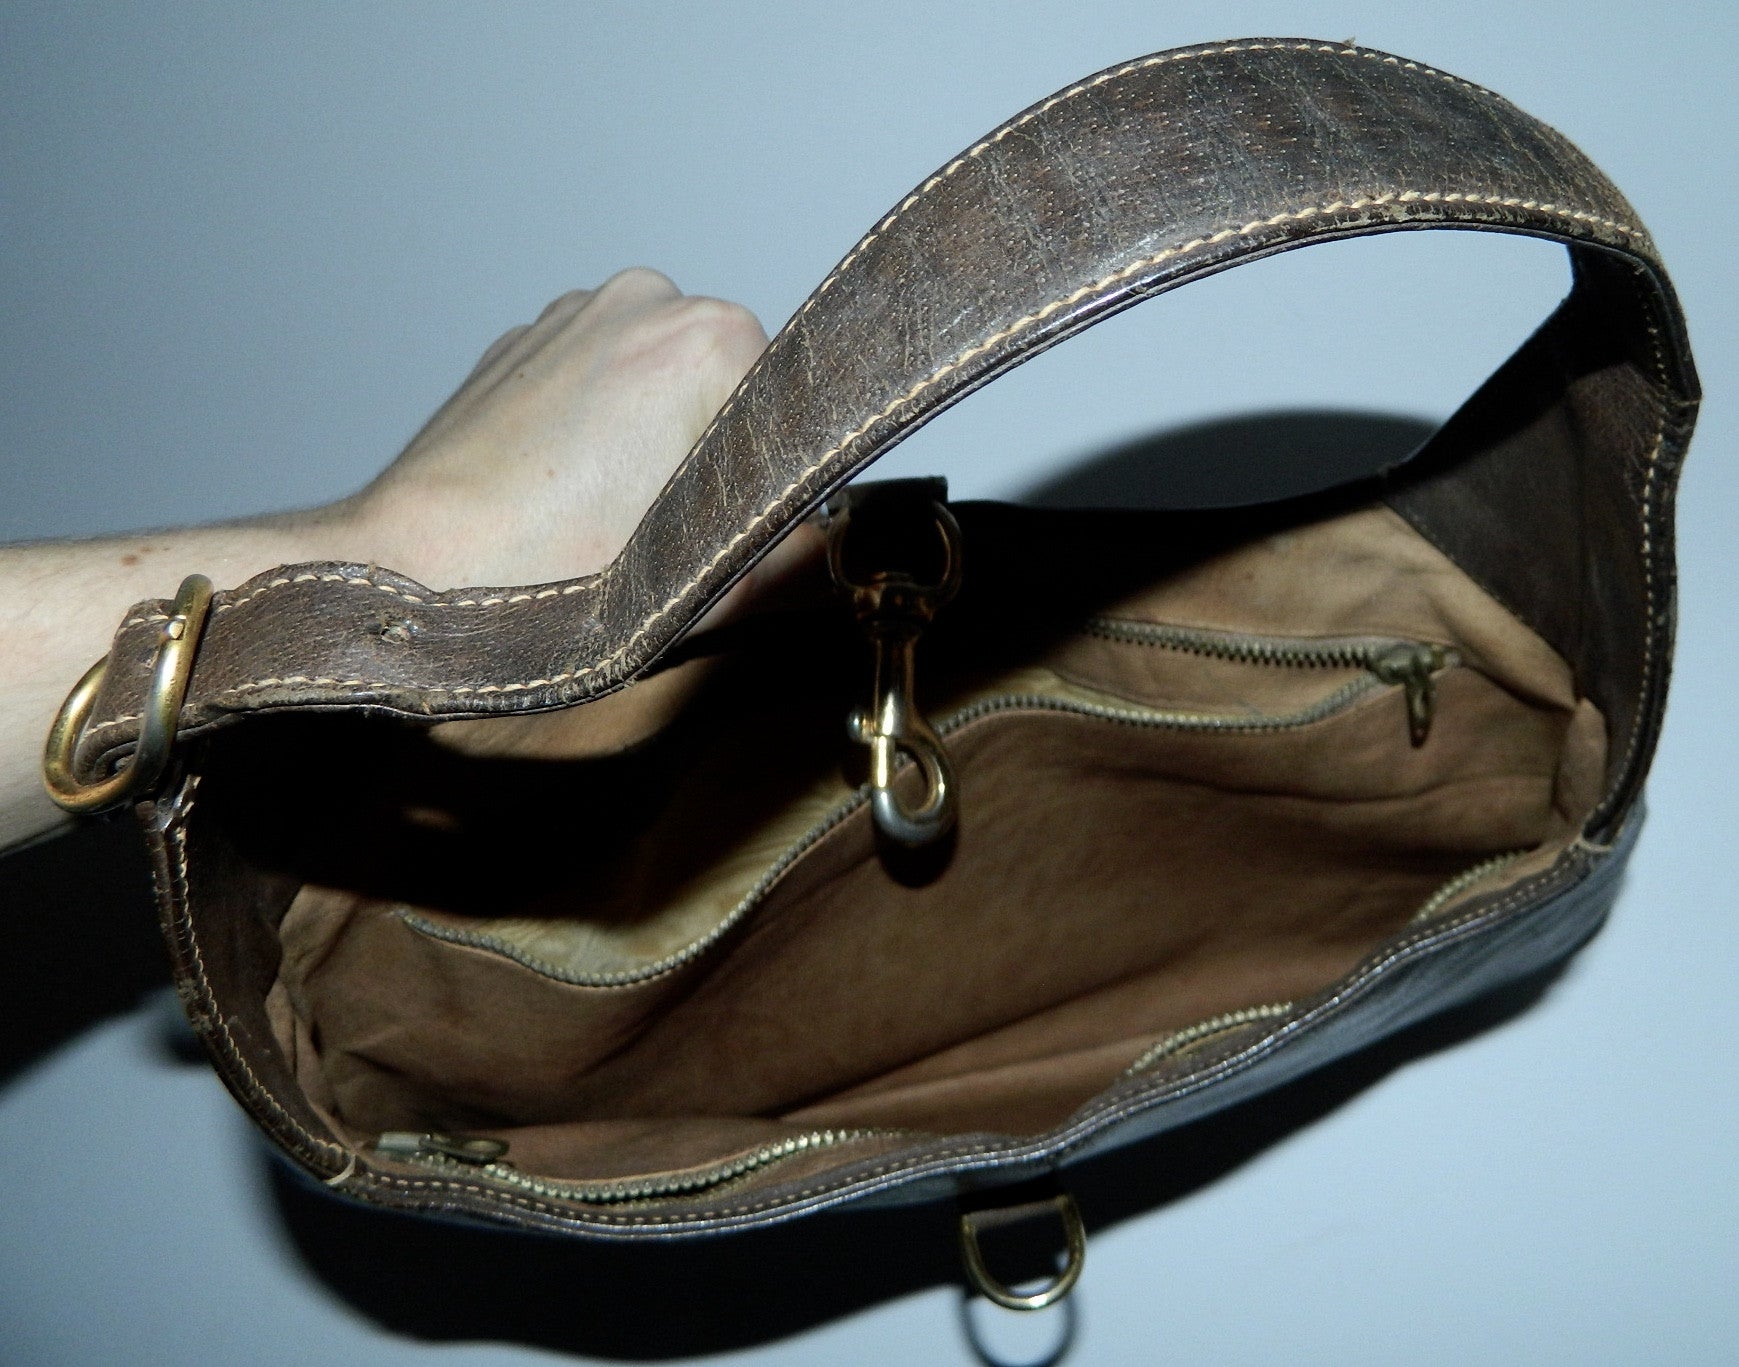 vintage GUCCI bag brown leather 1960s Jackie O "Bouvier" purse